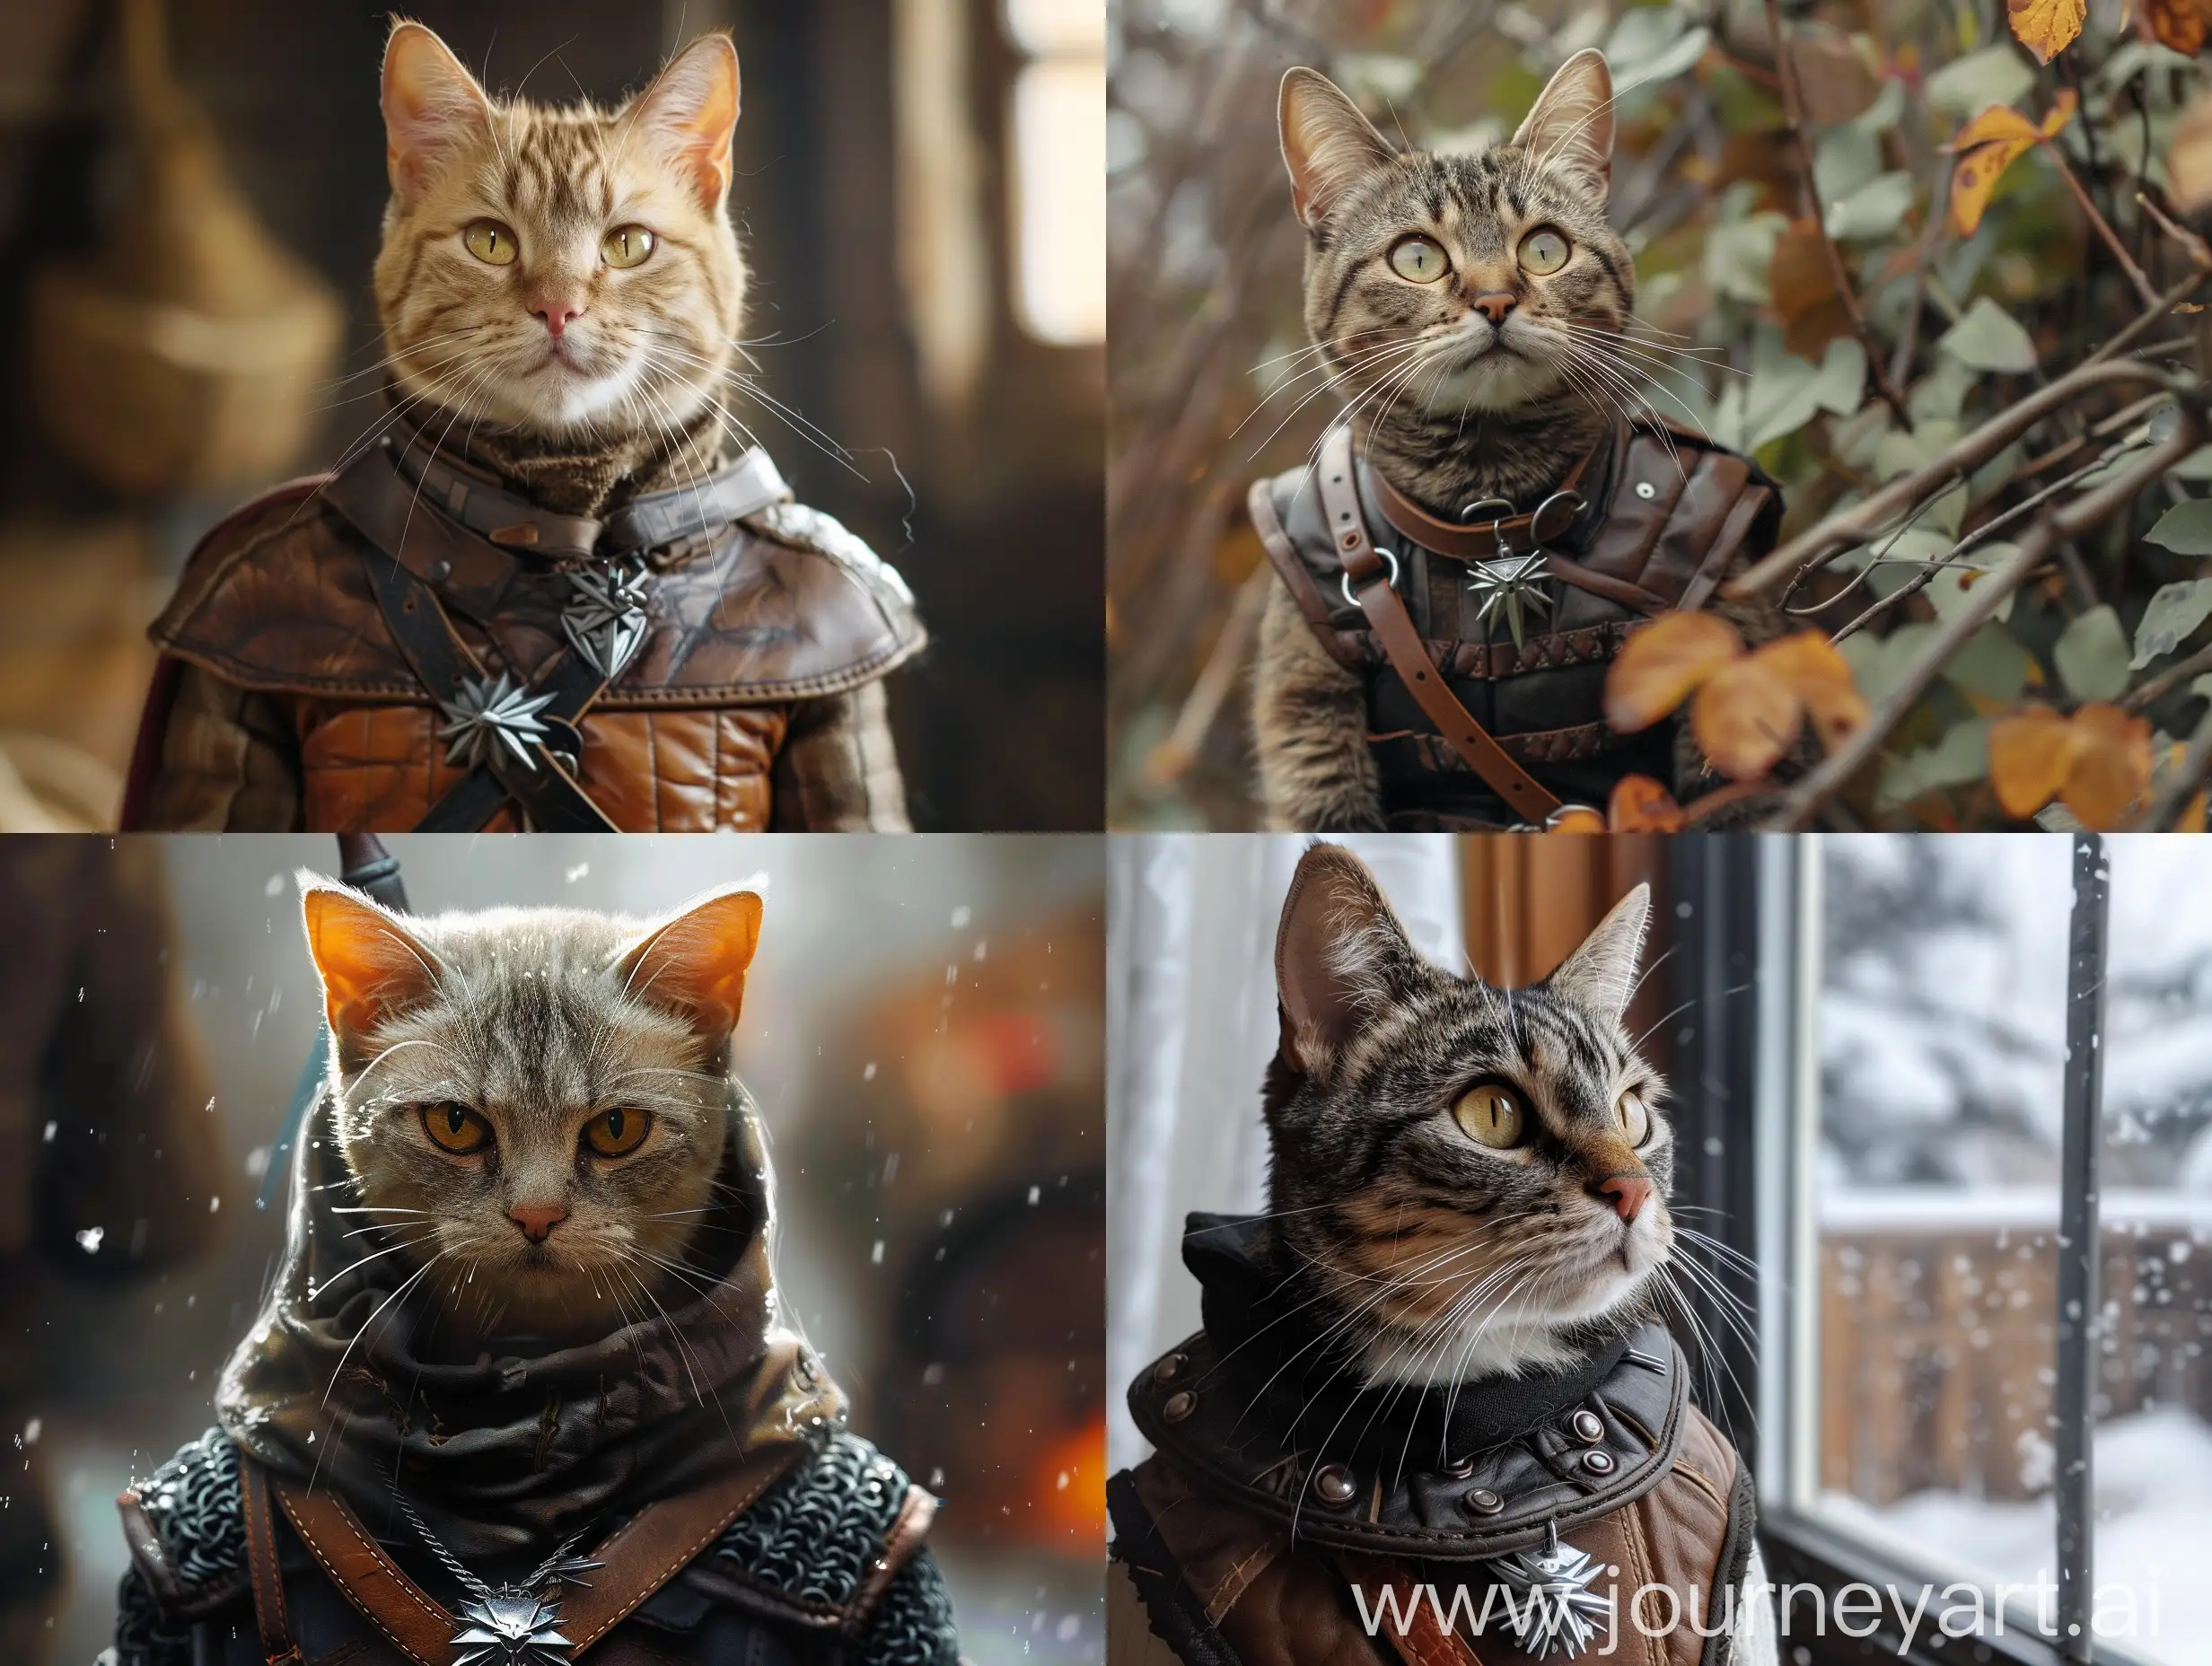 Geralt-the-Witcher-Cat-Portrait-in-43-Aspect-Ratio